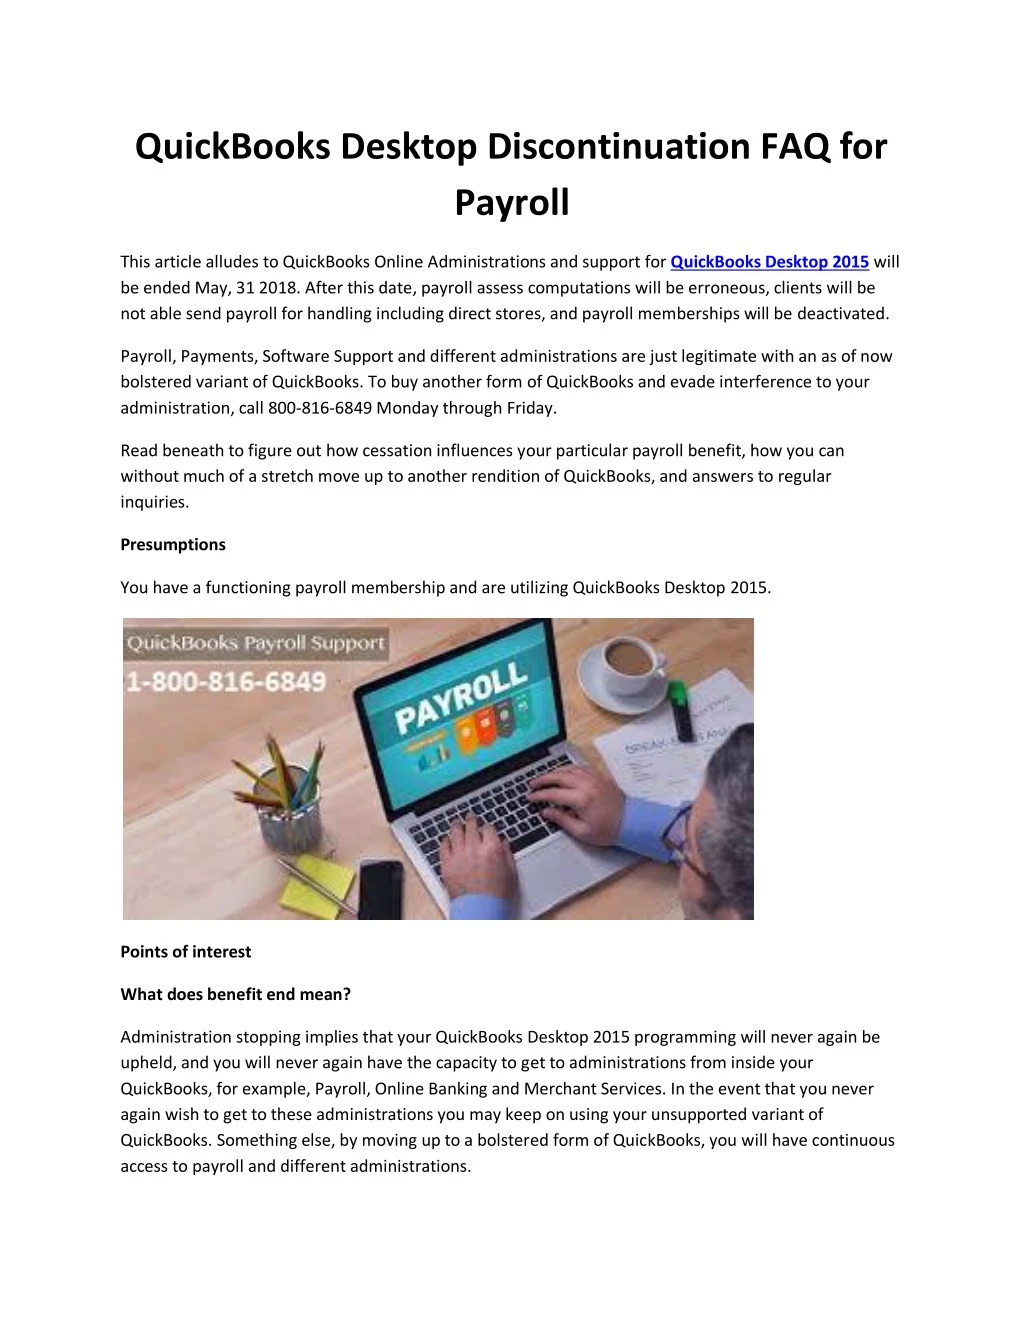 quickbooks desktop discontinuation faq for payroll